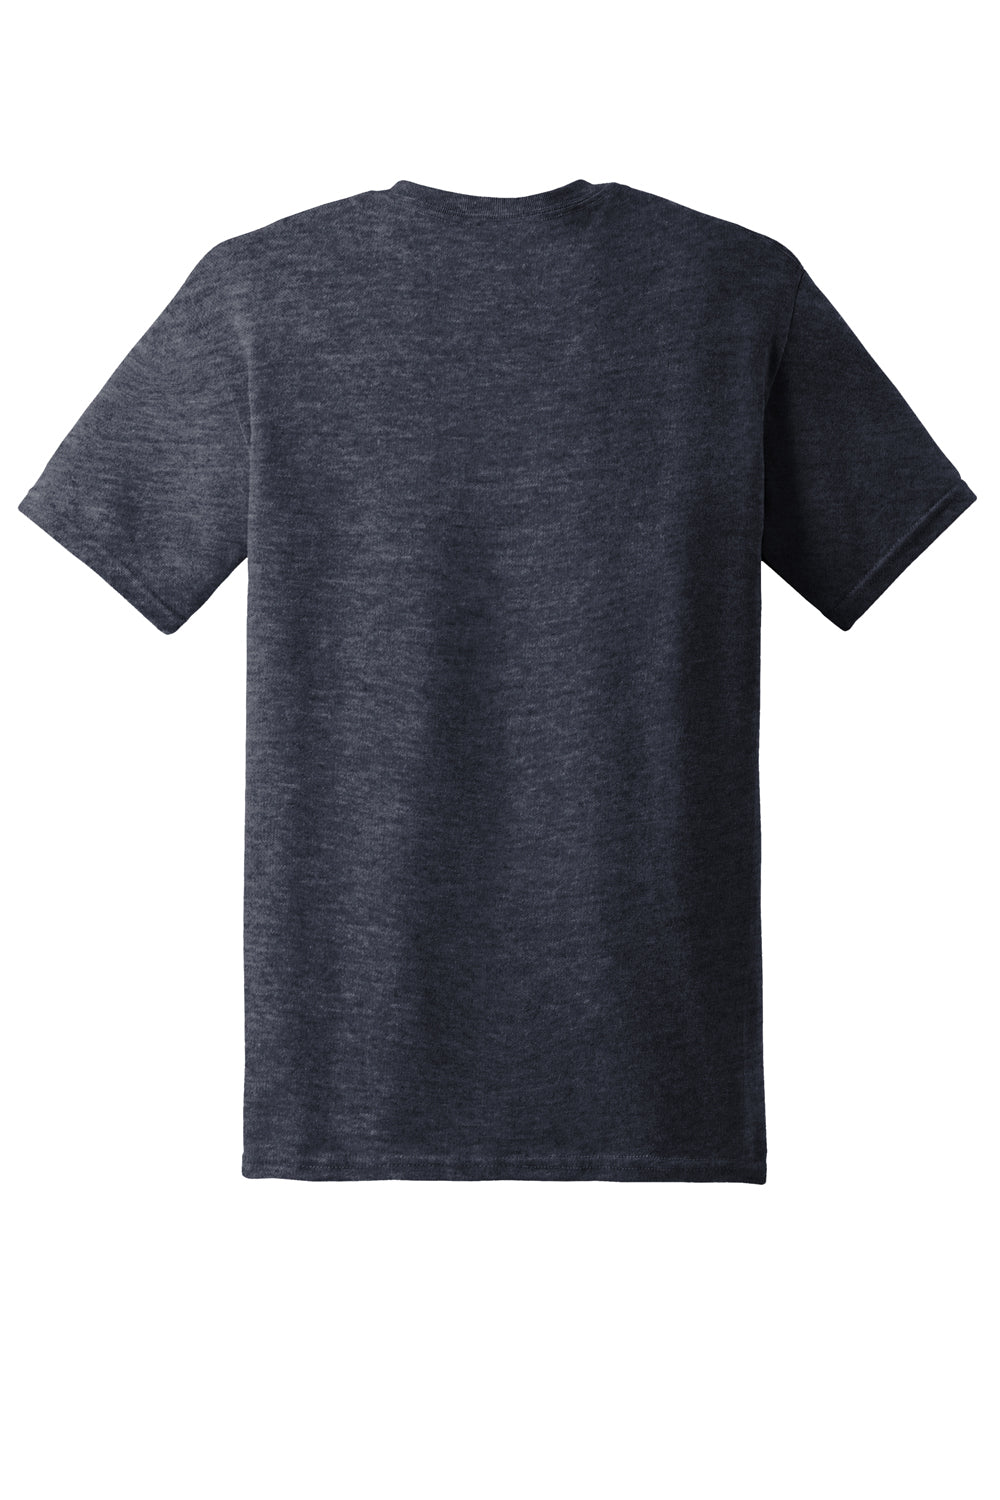 Gildan 5000/G500 Mens Short Sleeve Crewneck T-Shirt Heather Navy Blue Flat Back